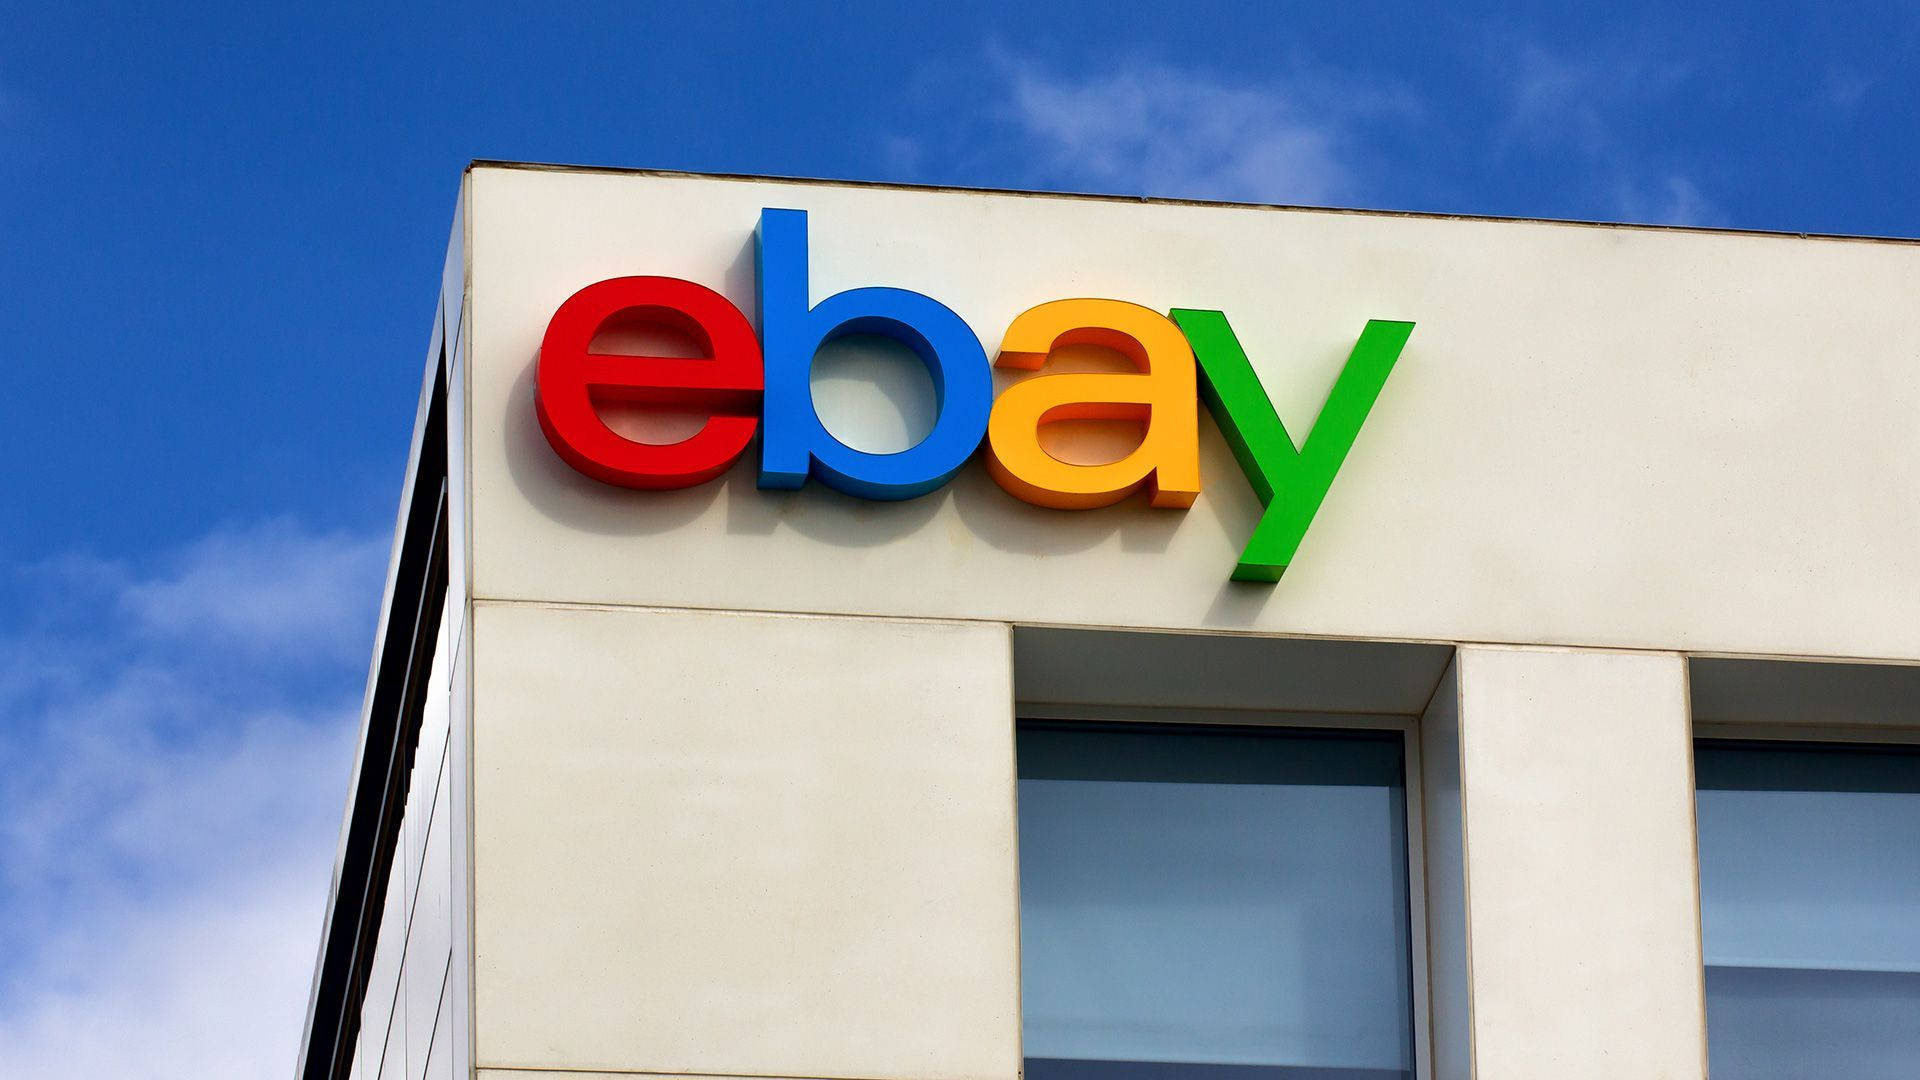 Ebay Symbol On Building